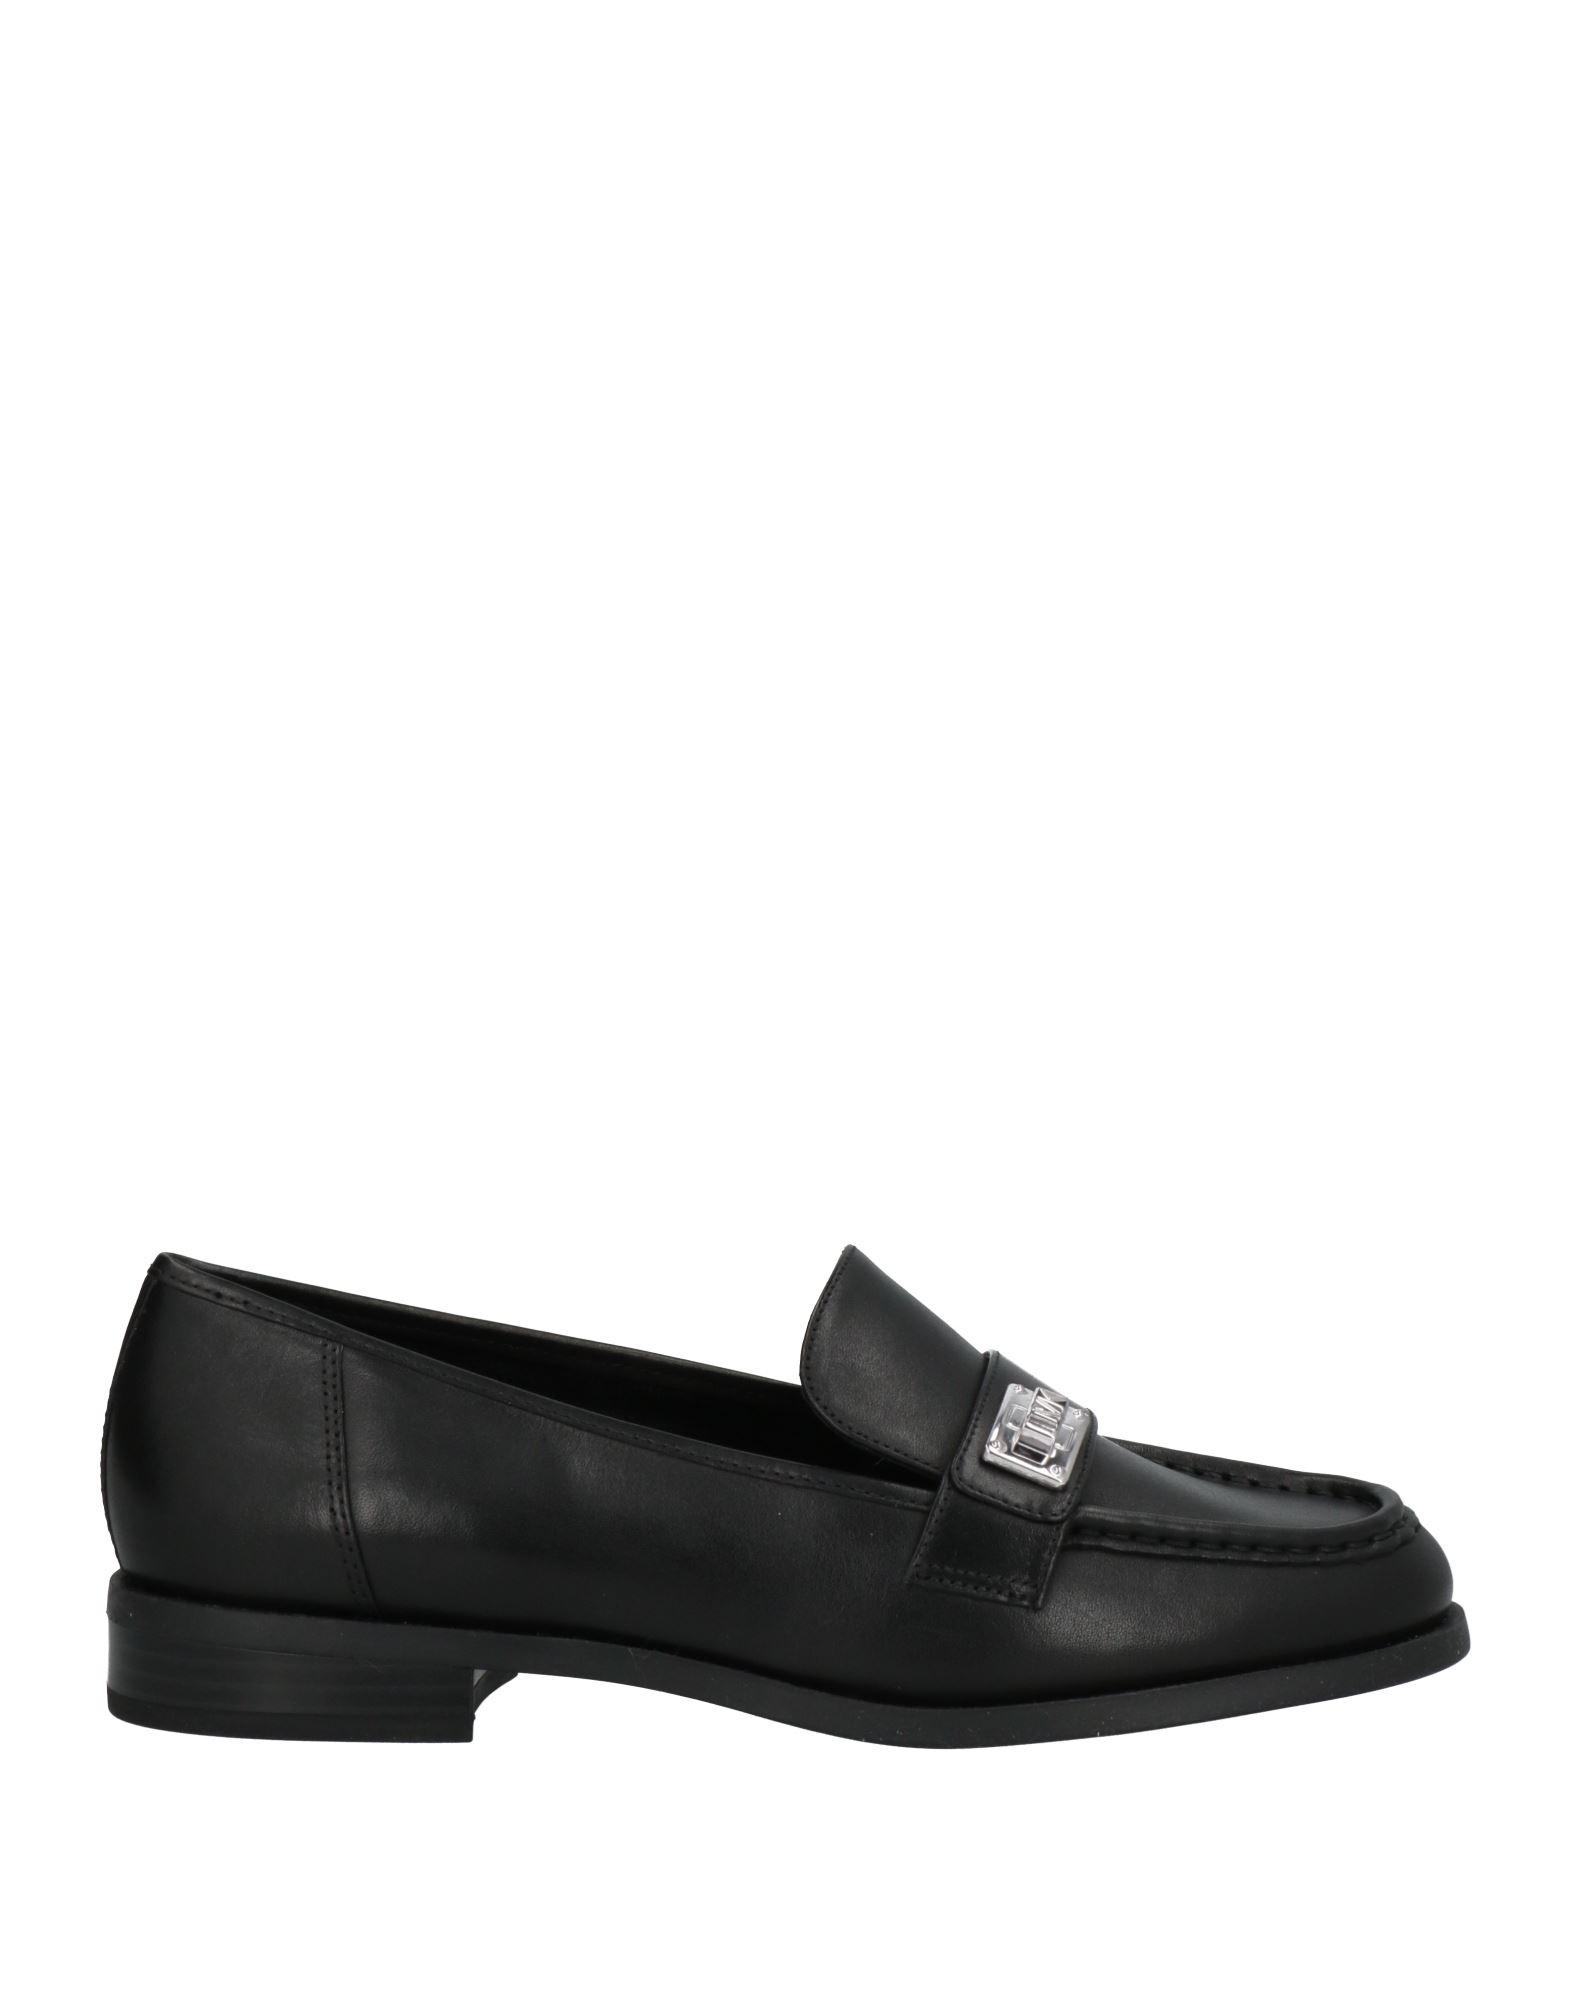 Shop Michael Michael Kors Woman Loafers Black Size 6.5 Soft Leather